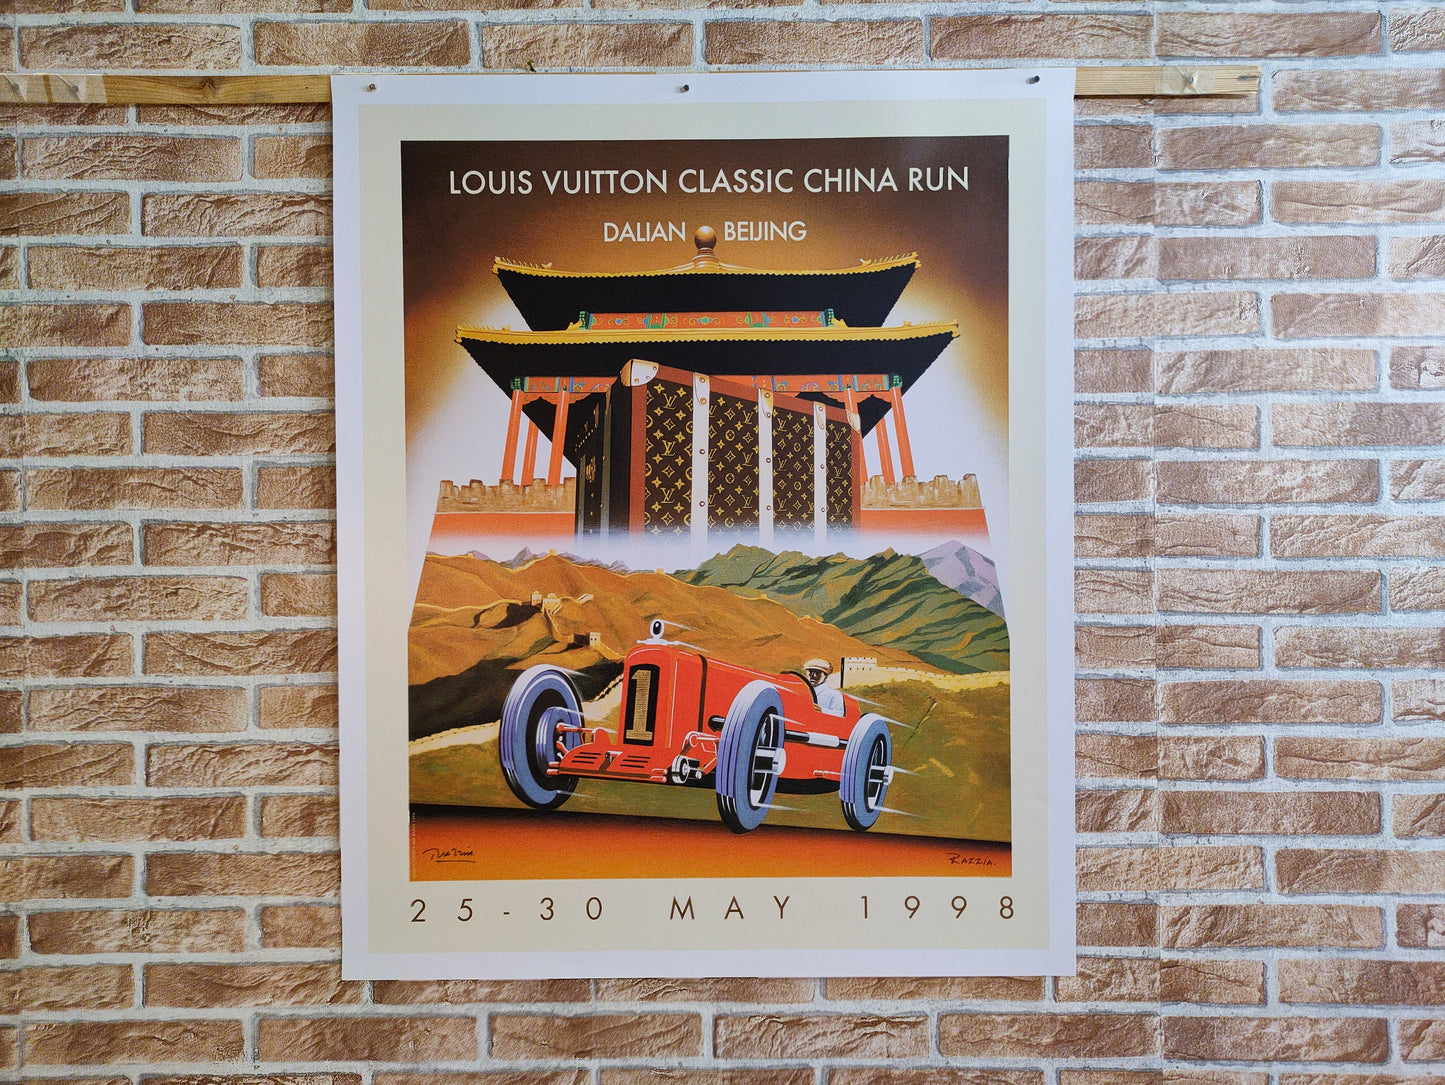 Razzia | Manifesto pubblicitario - Louis Vuitton Classic China Run